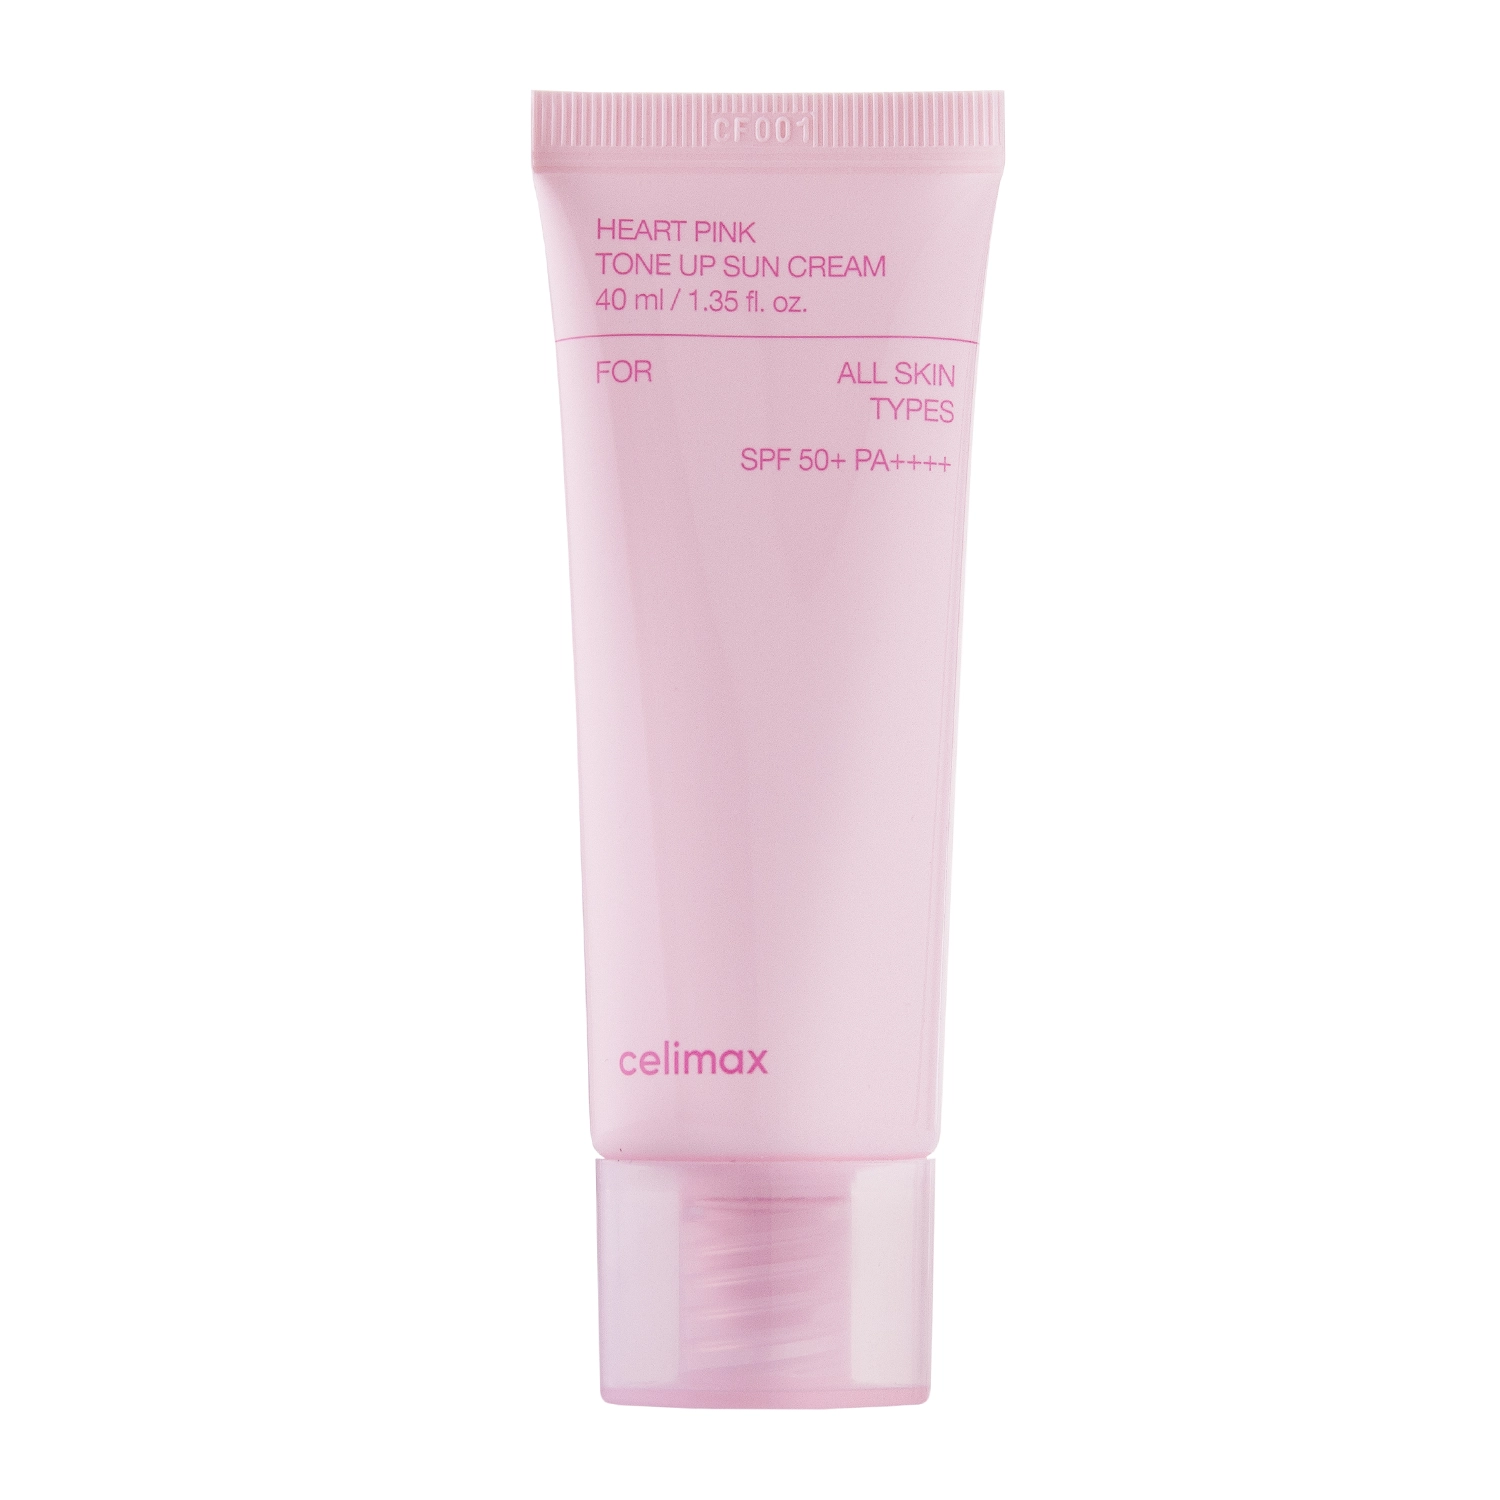 Celimax - Heart Pink Tone Up Sun Cream SPF 50+ PA++++ - Зволожувальний сонцезахисний крем - 40ml